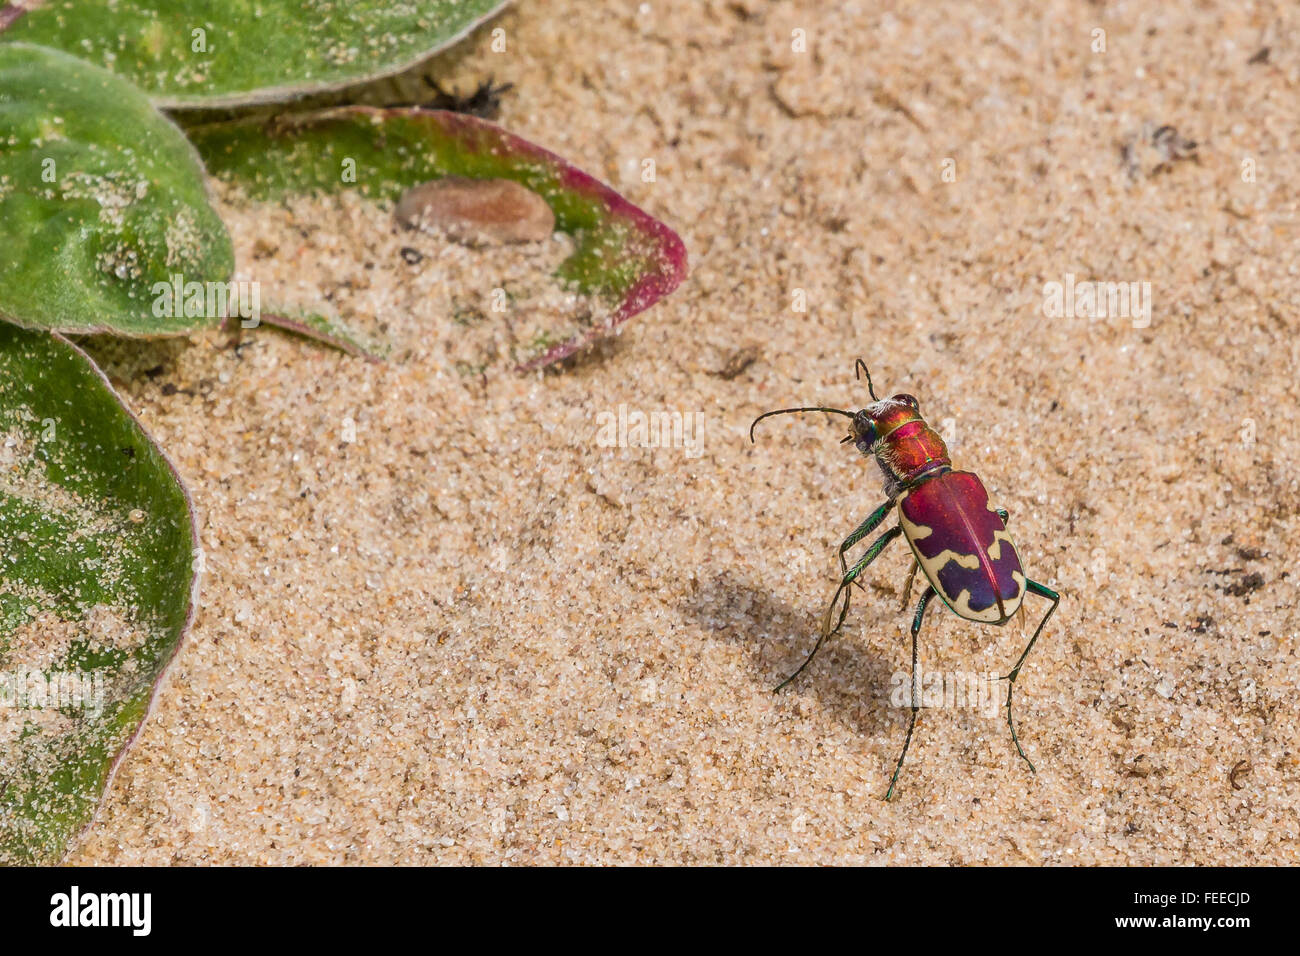 A beautiful Big Sand Tiger Beetle, Cicindela formosa, on a sandy trail in Texas Stock Photo